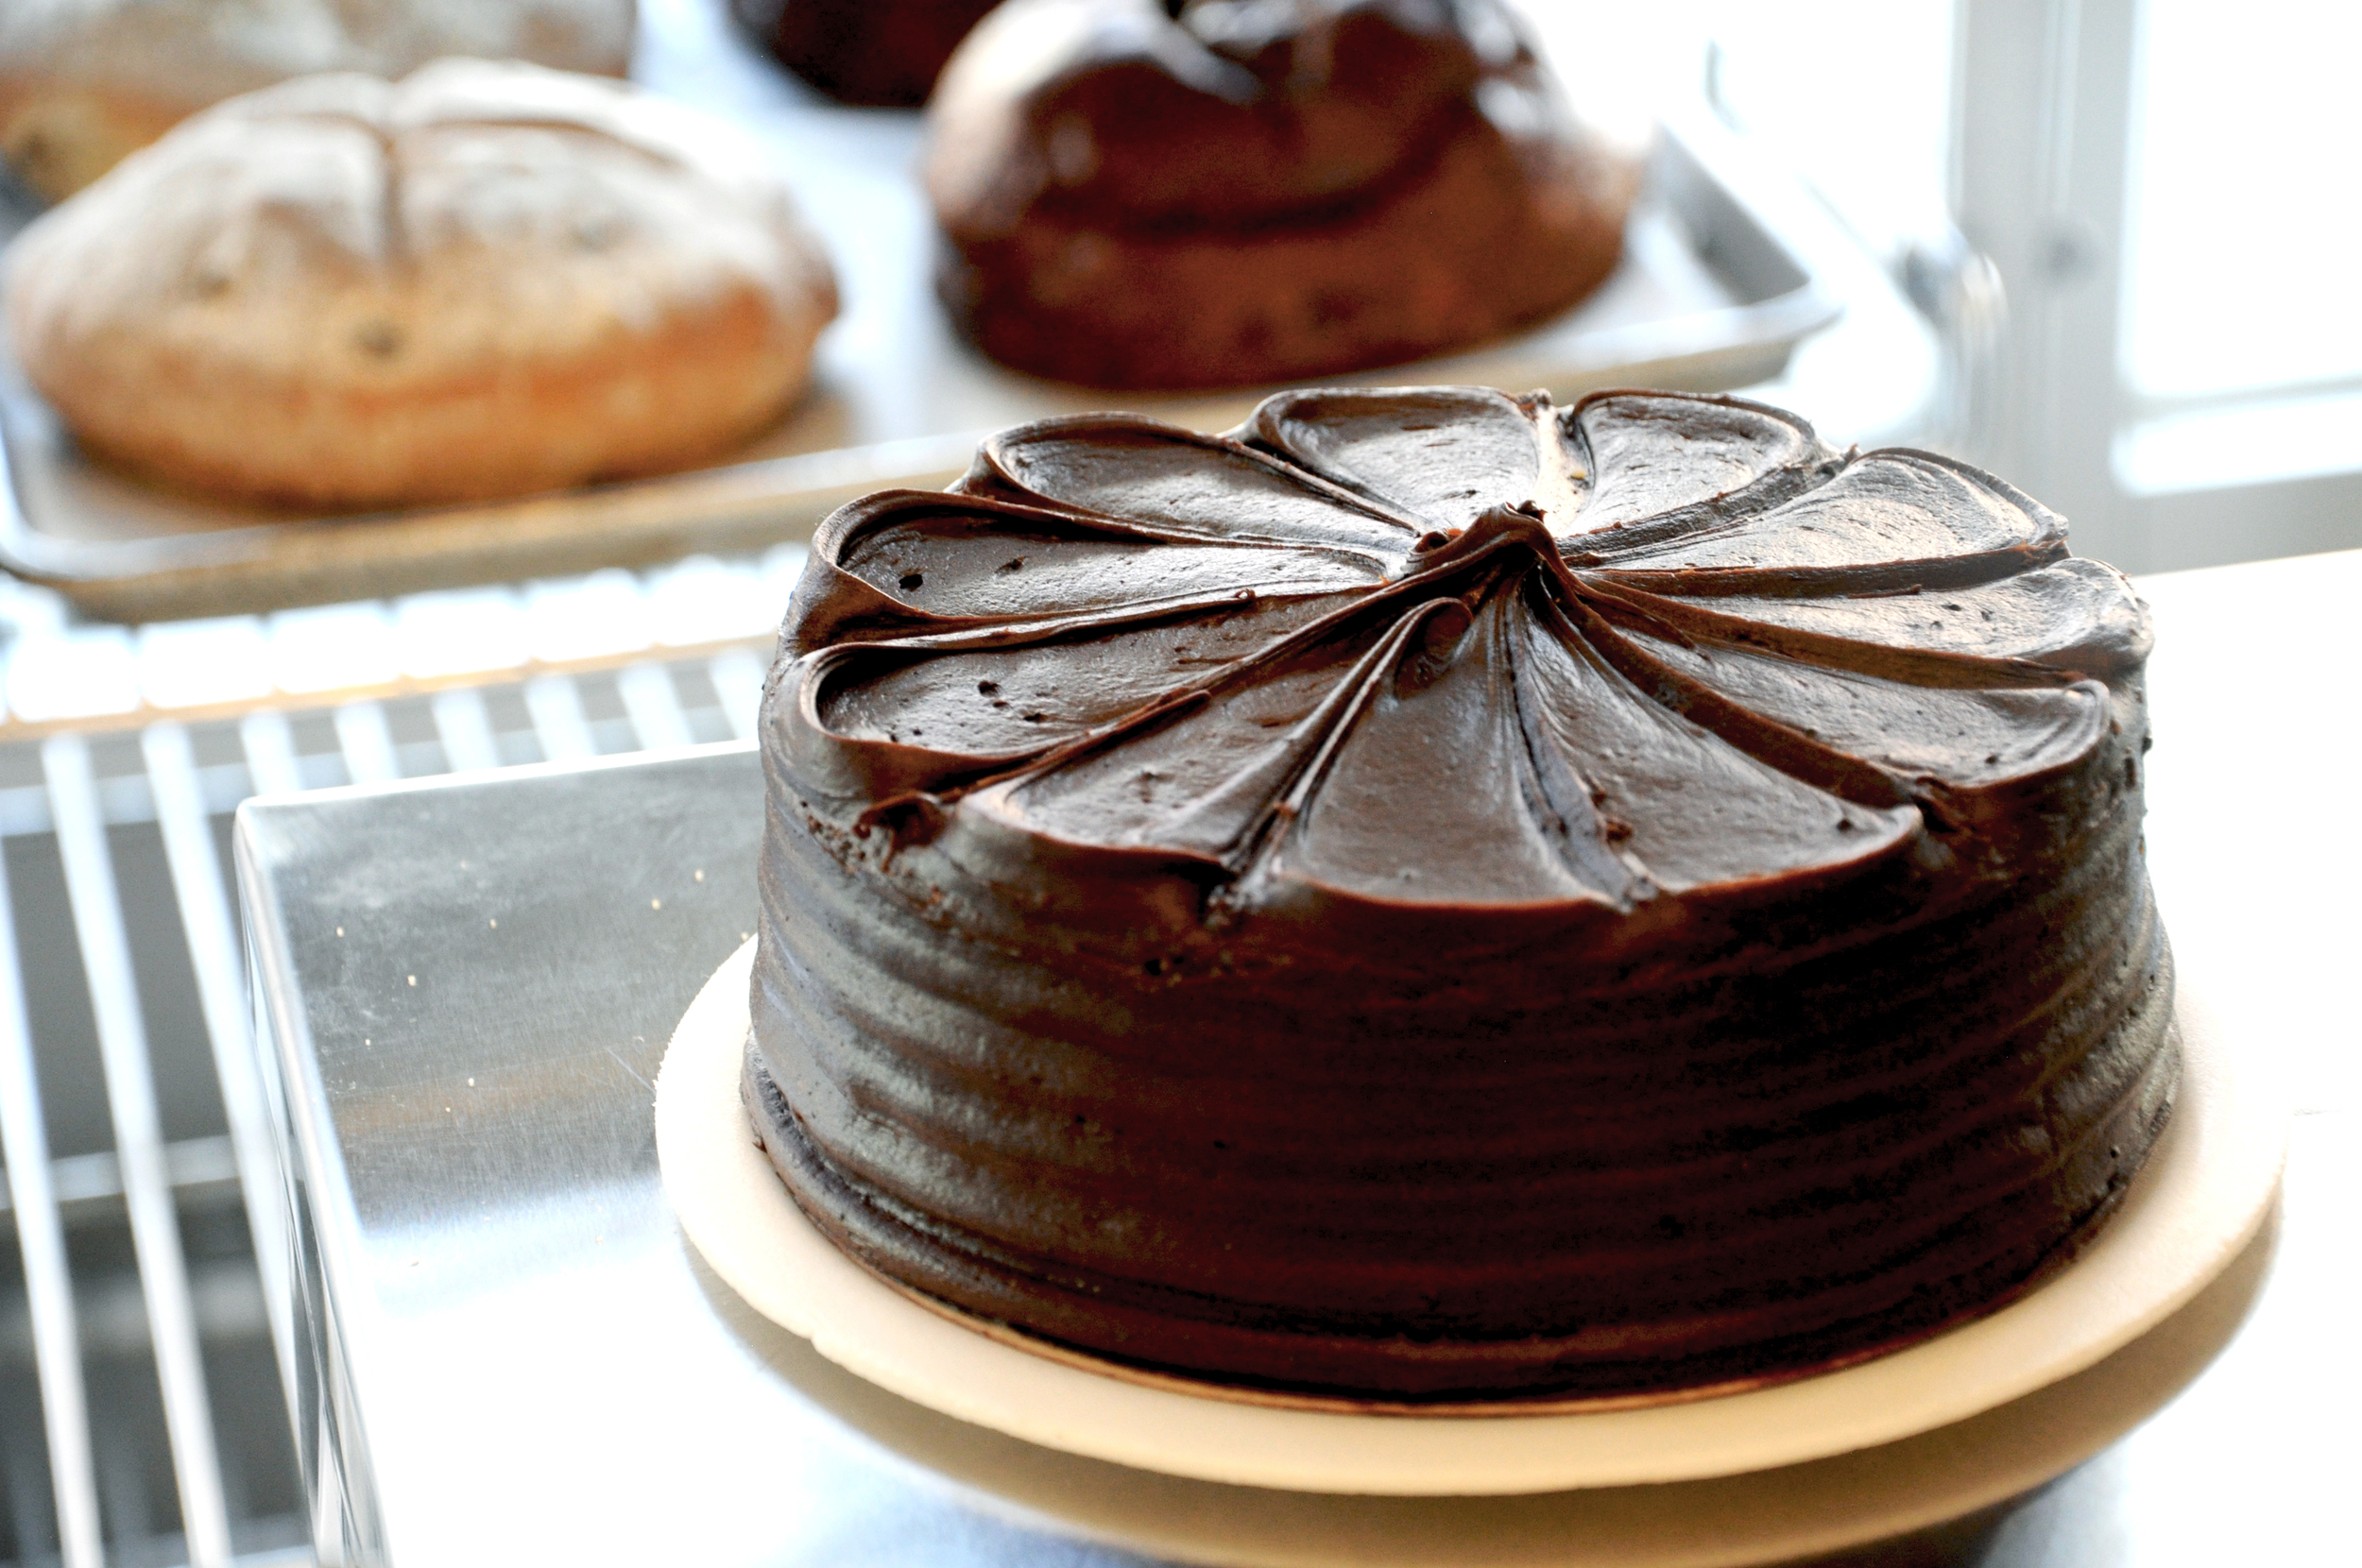  Chocolate cake at Leske's Bakery 